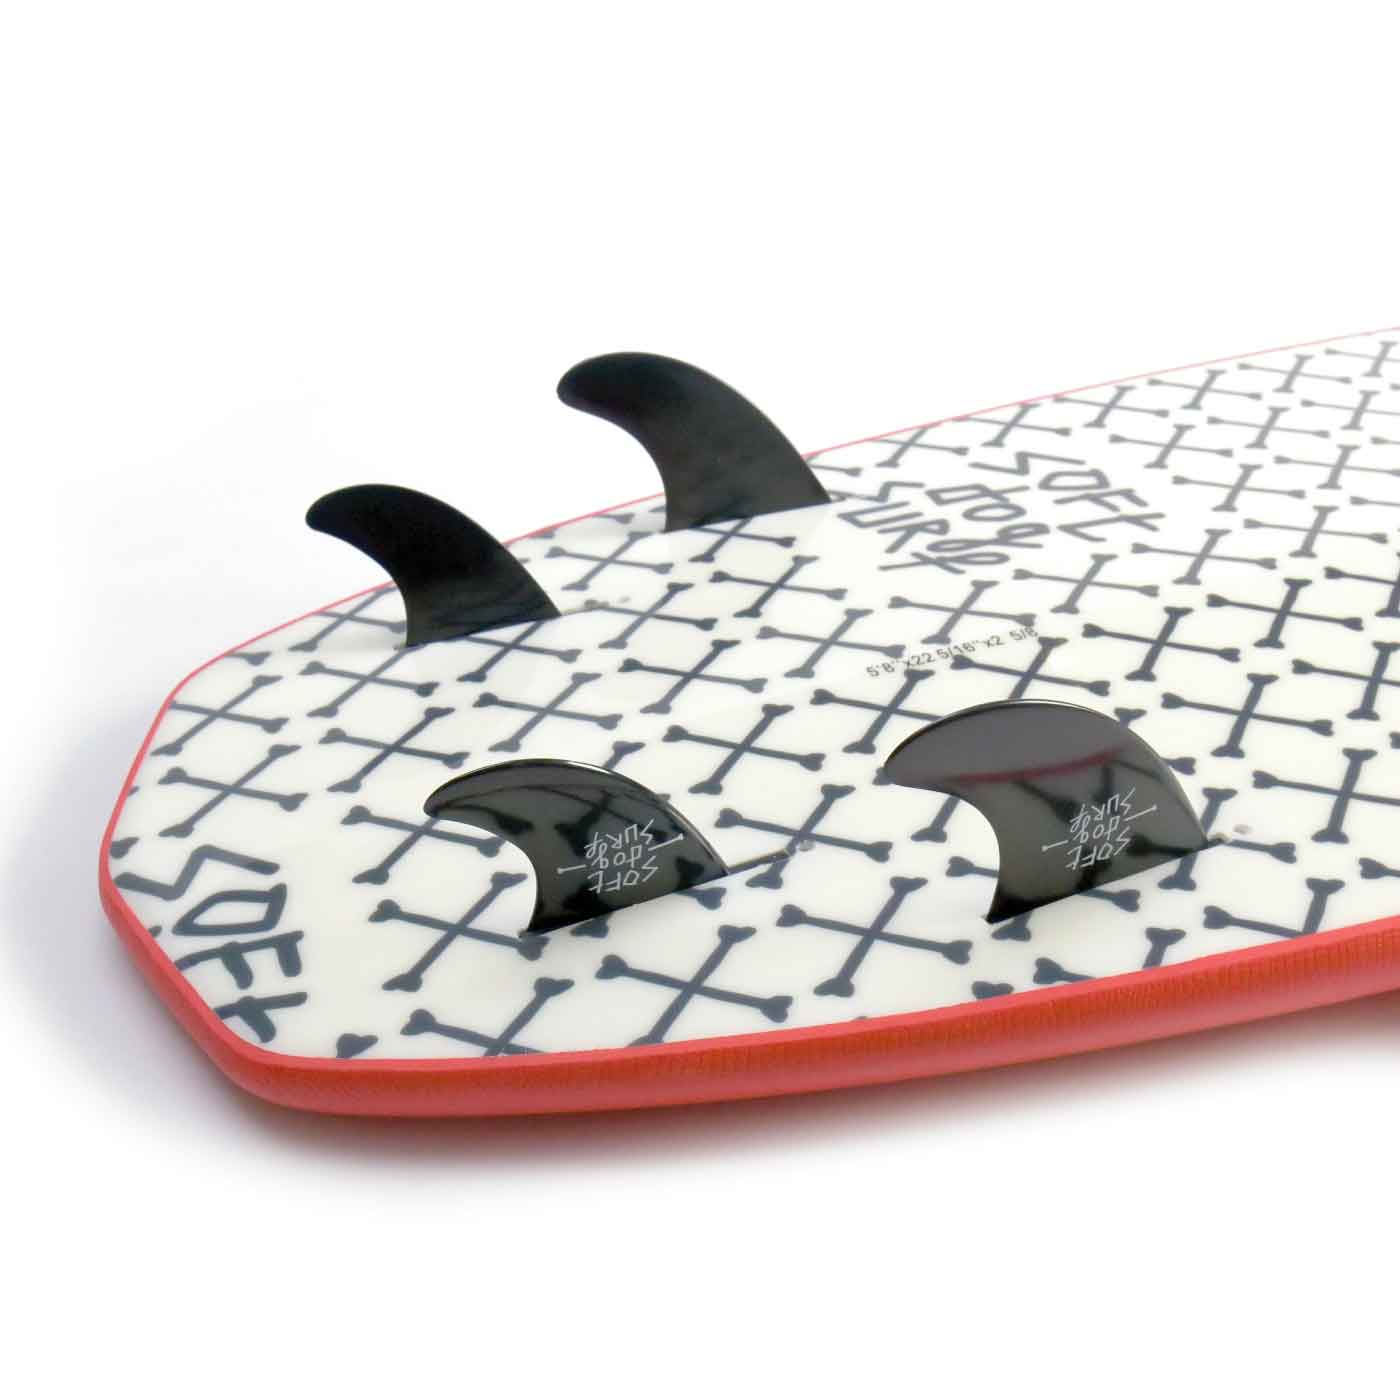 5'8 greyhound soft top surfboard futures quad fins setup